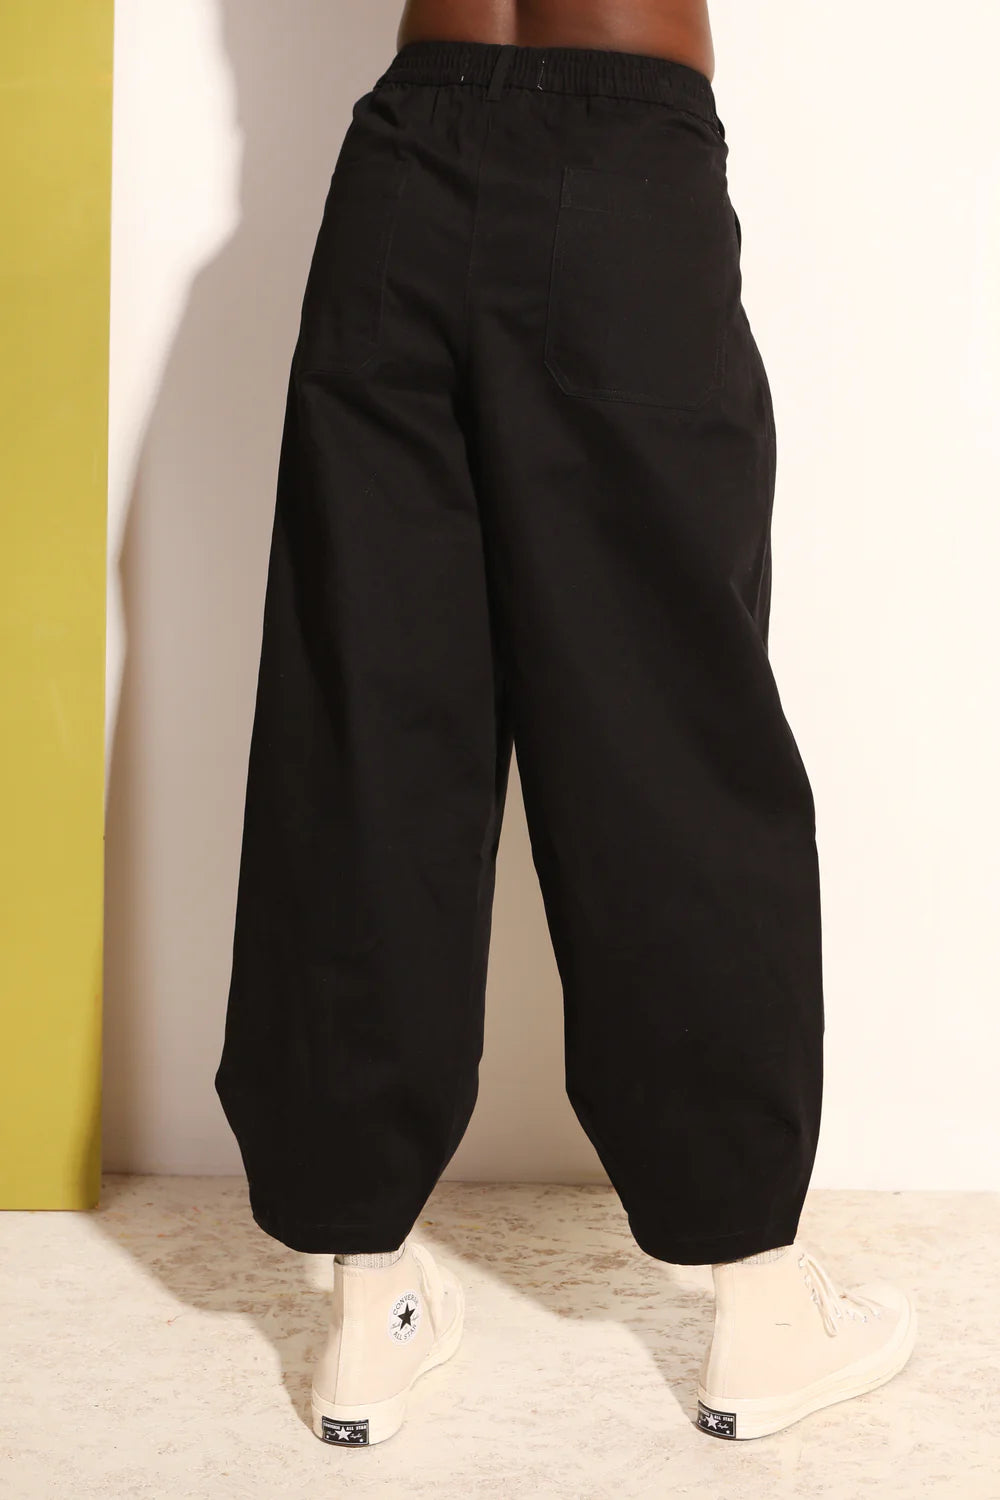 Men's Jean Jogger Harem Pant Men Pants Harajuku Cargo Jeans Casual Harem  Denim Hip Hop Sweatpants Male Trousers Black S at Amazon Men's Clothing  store